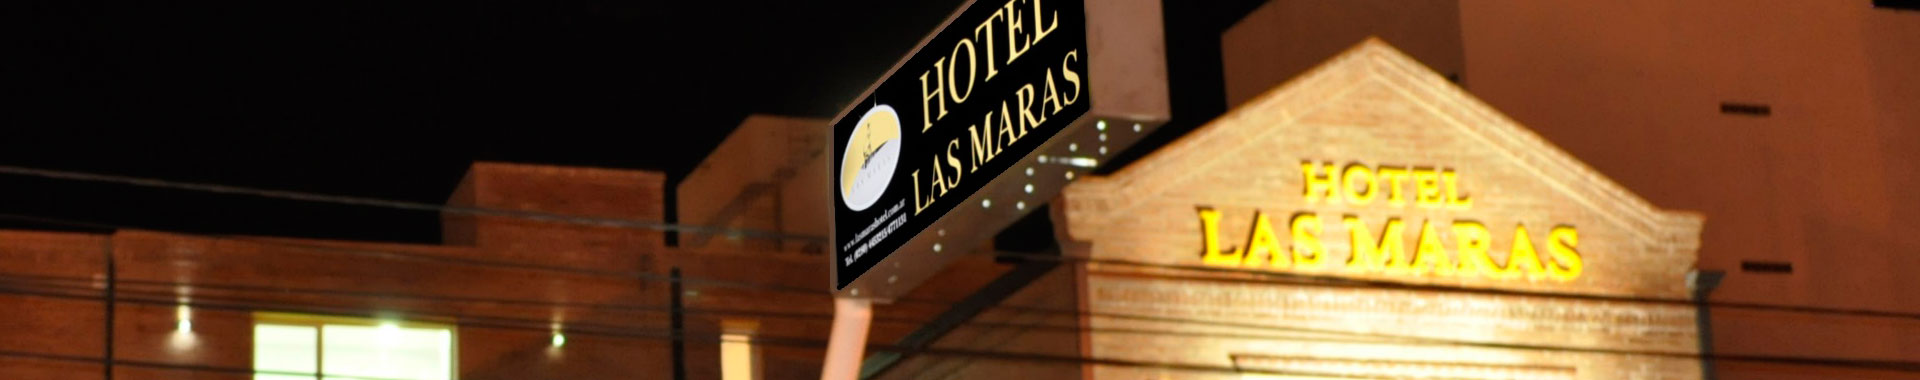 Argentina - Peninsula Valdez - Hoteles - Maras